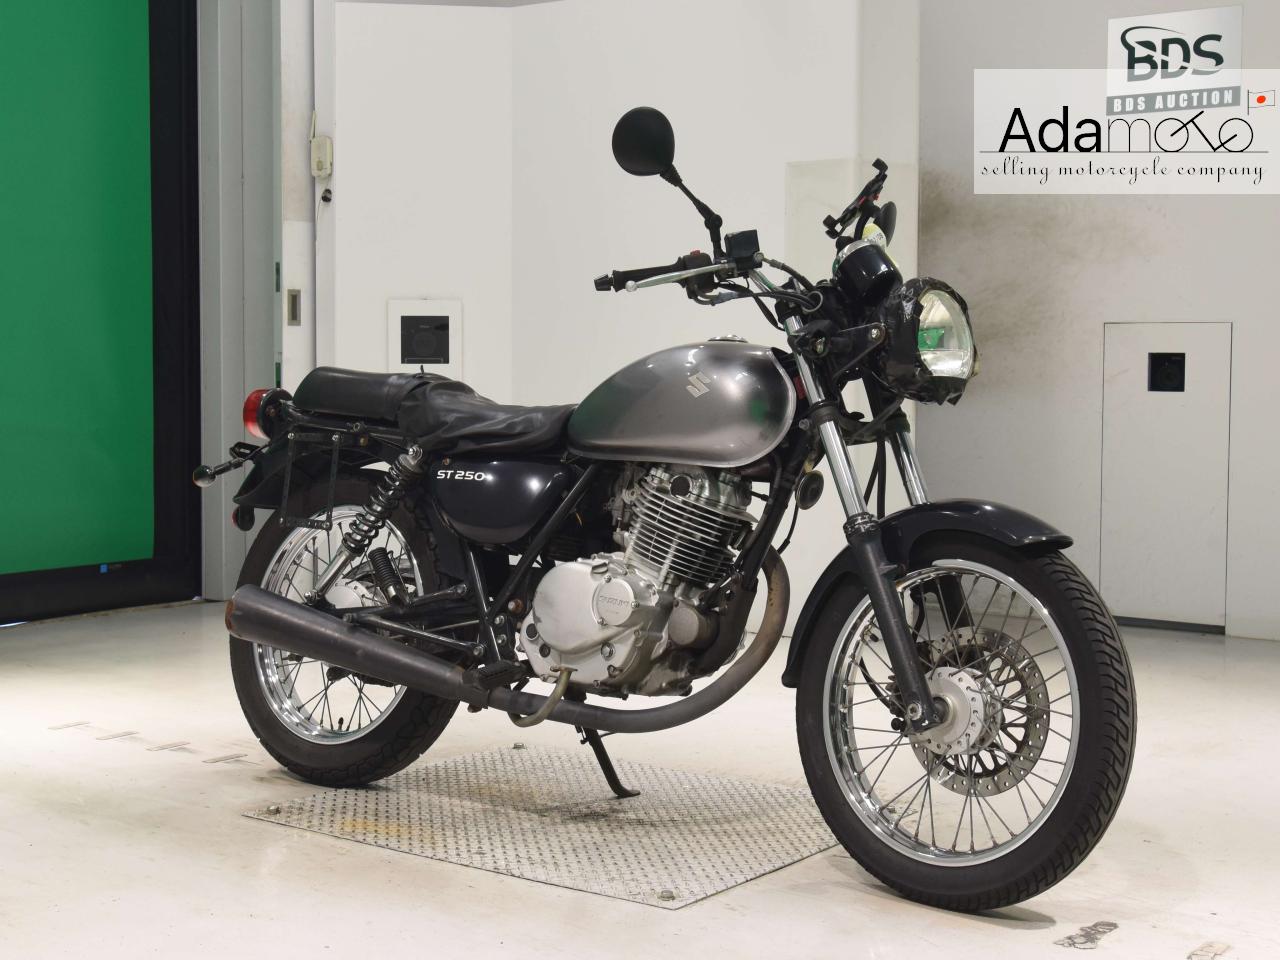 Suzuki ST250 - Adamoto - Motorcycles from Japan